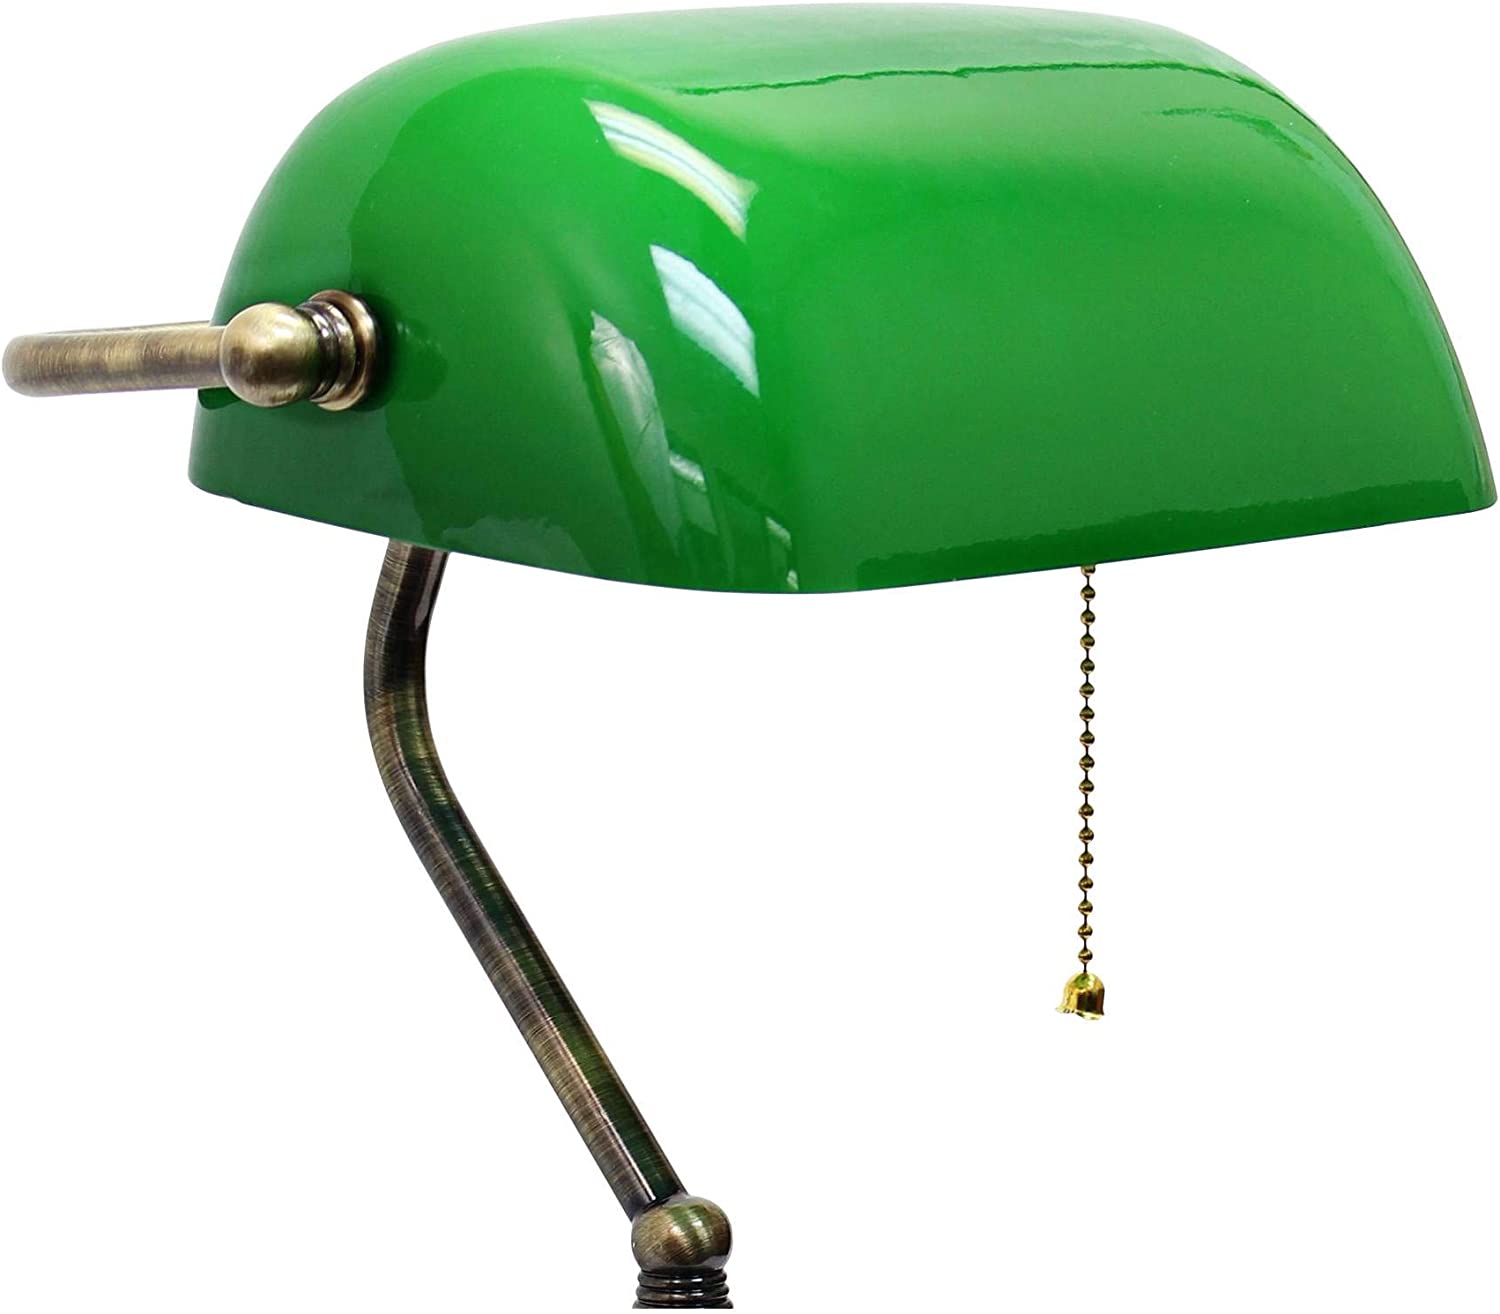 Simple Designs LT3216-GRN Executive Banker's Glass Shade Desk Lamp, Antique Nickel/Green